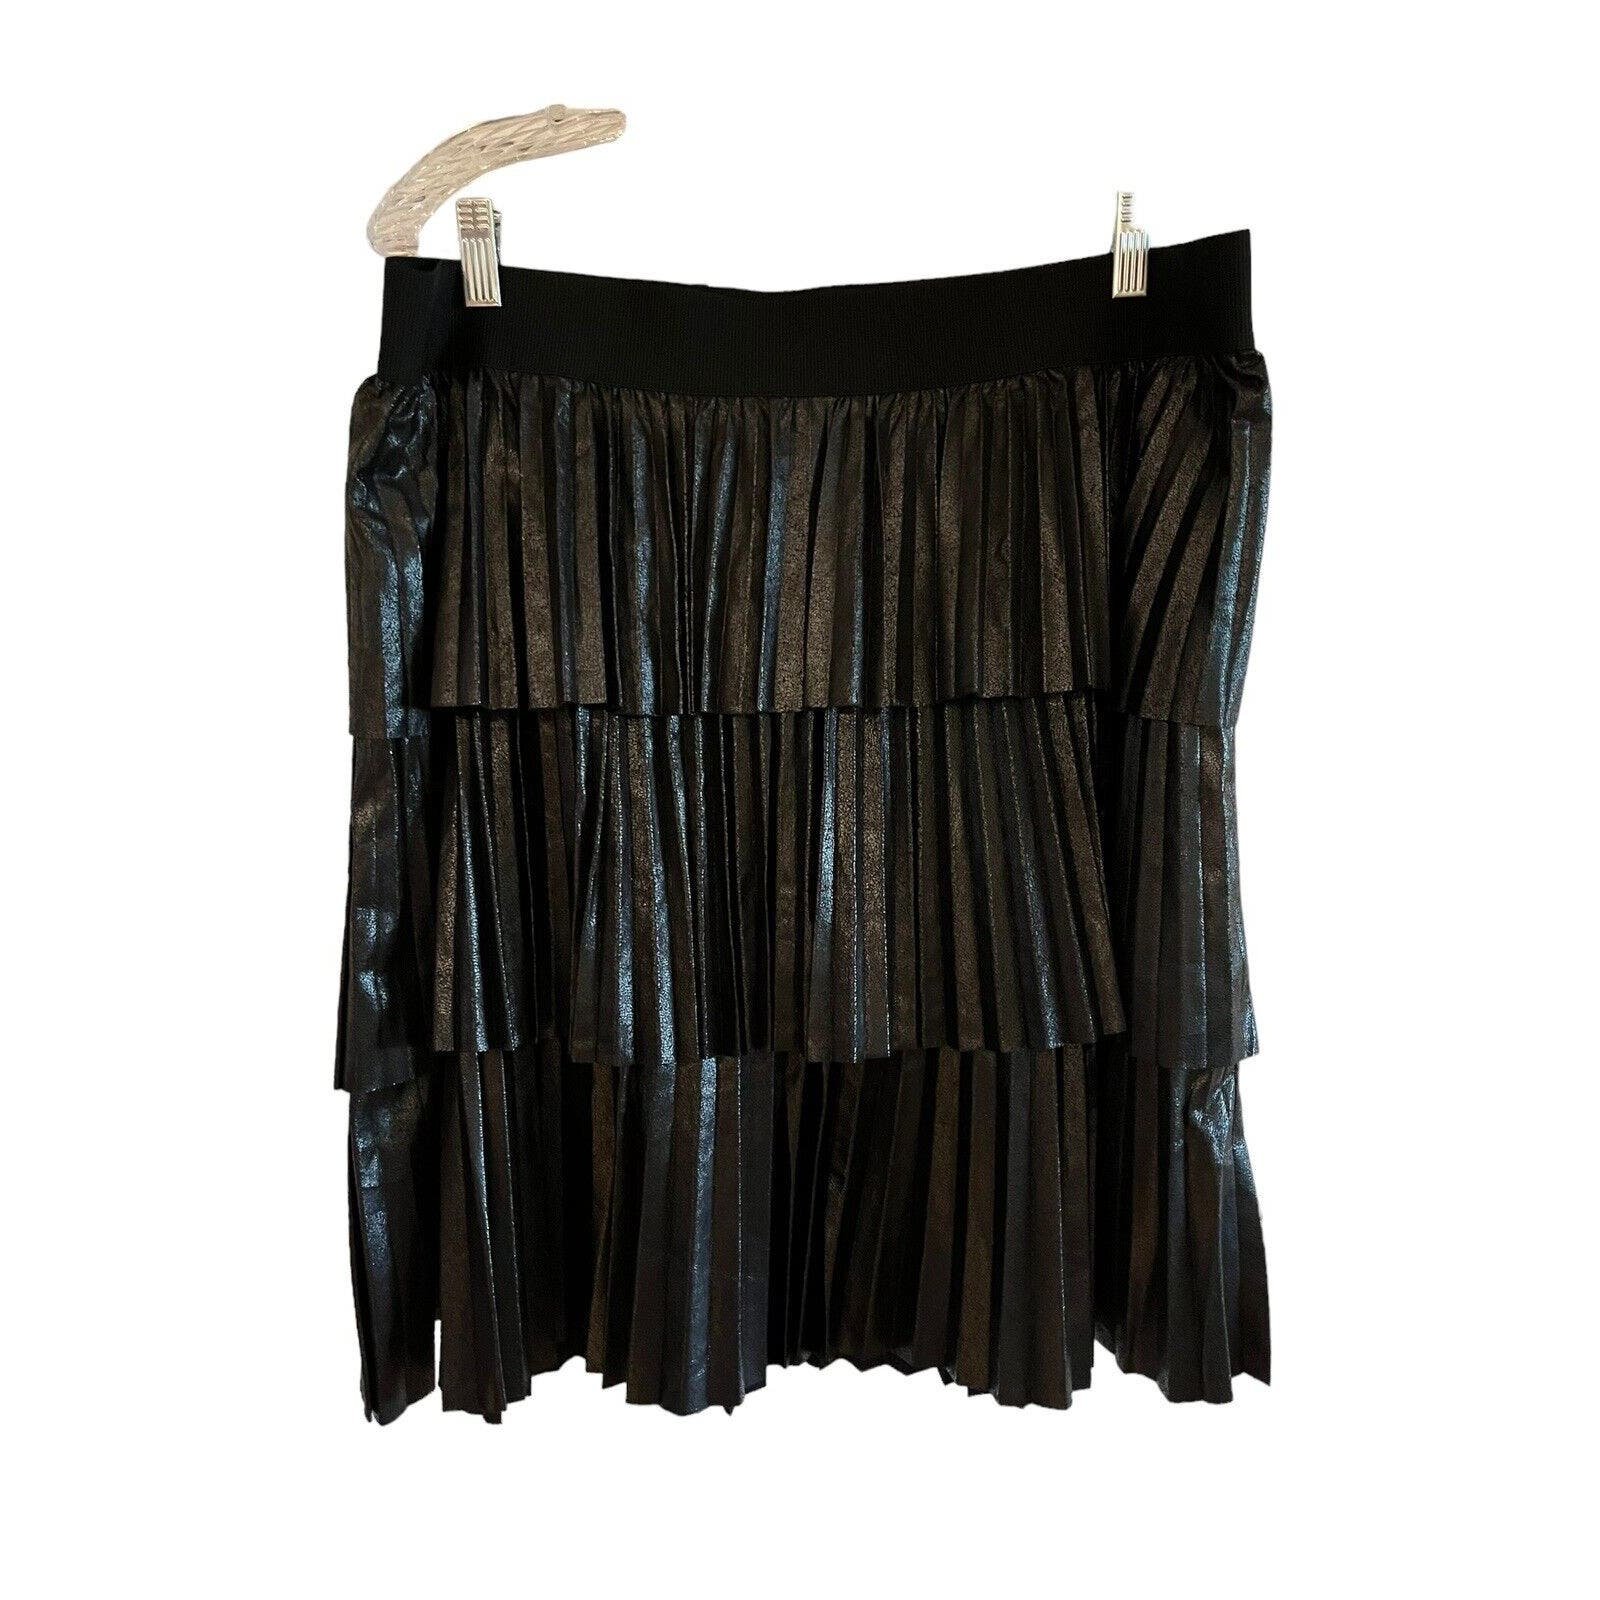 NWT Lane Bryant Pleated Ruffled Black Skirt Size 18/20 9FnmNdjXD